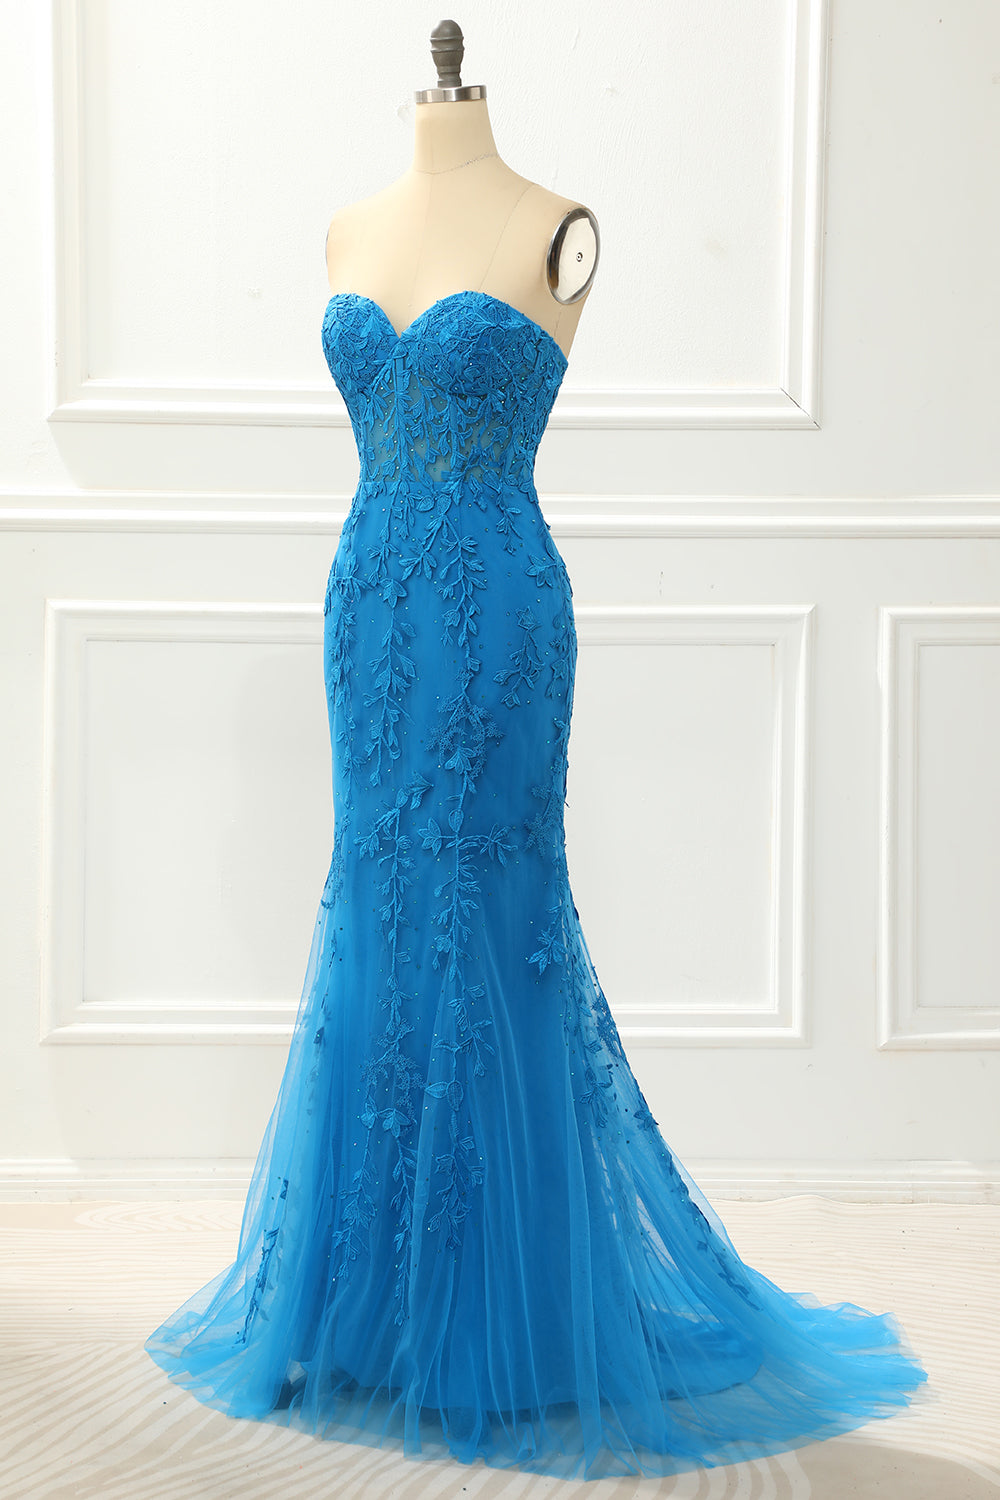 Mafia Dress, Blue Strapless Mermaid Prom Dress with Appliques